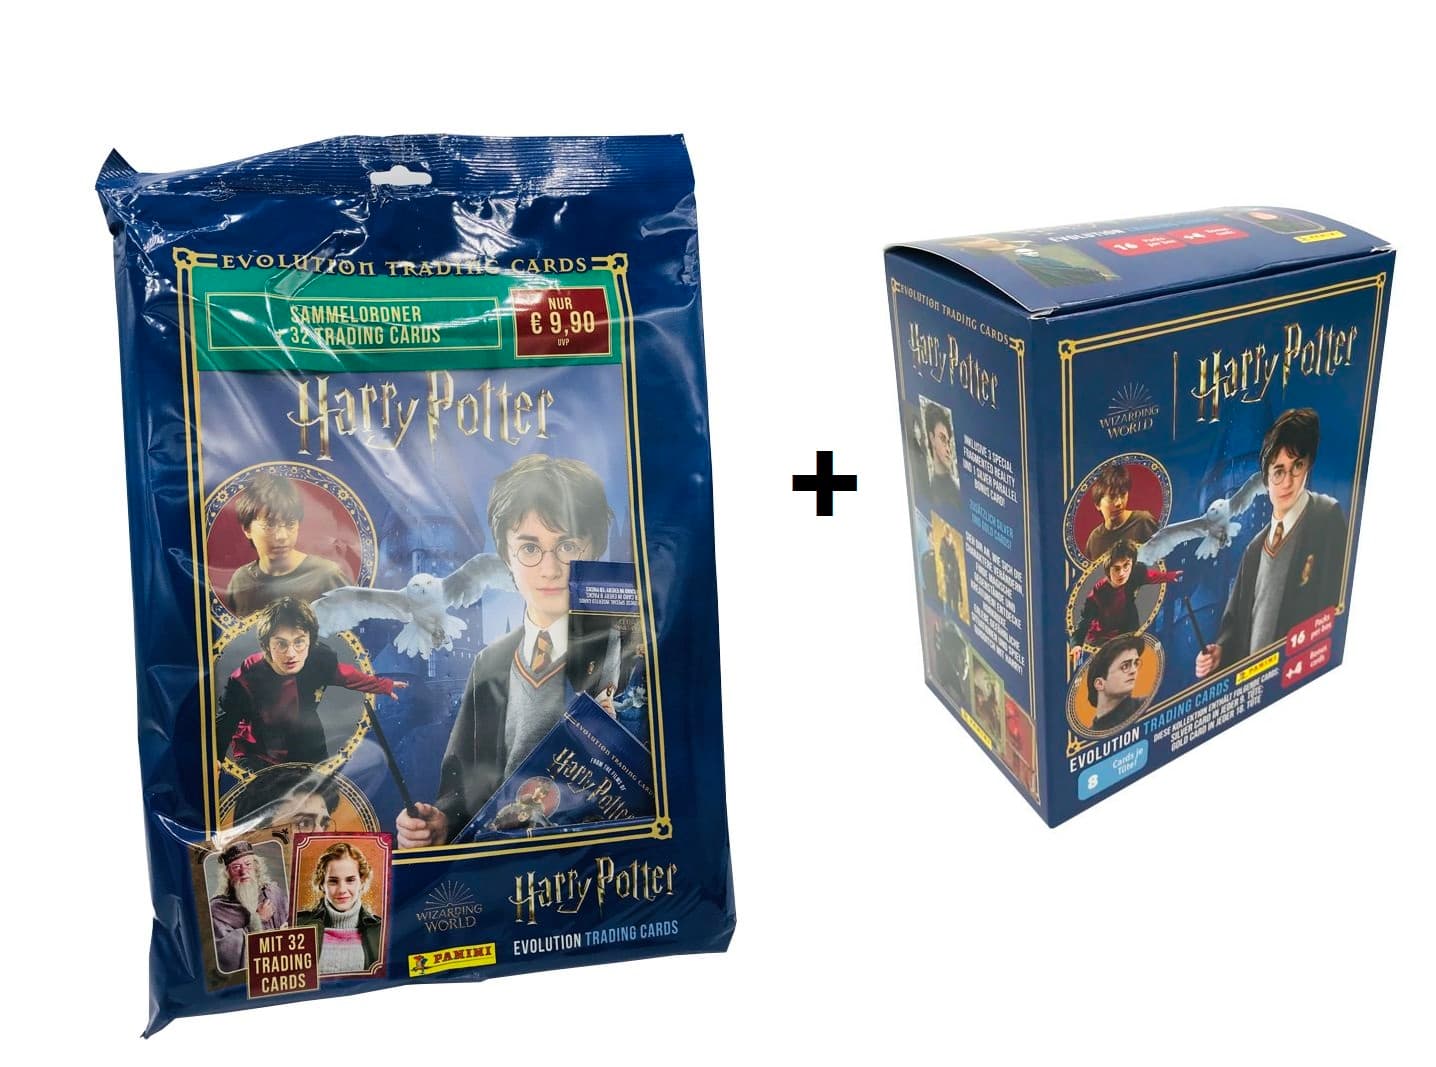 Harry Potter Evolution - Starterset und Mega Box